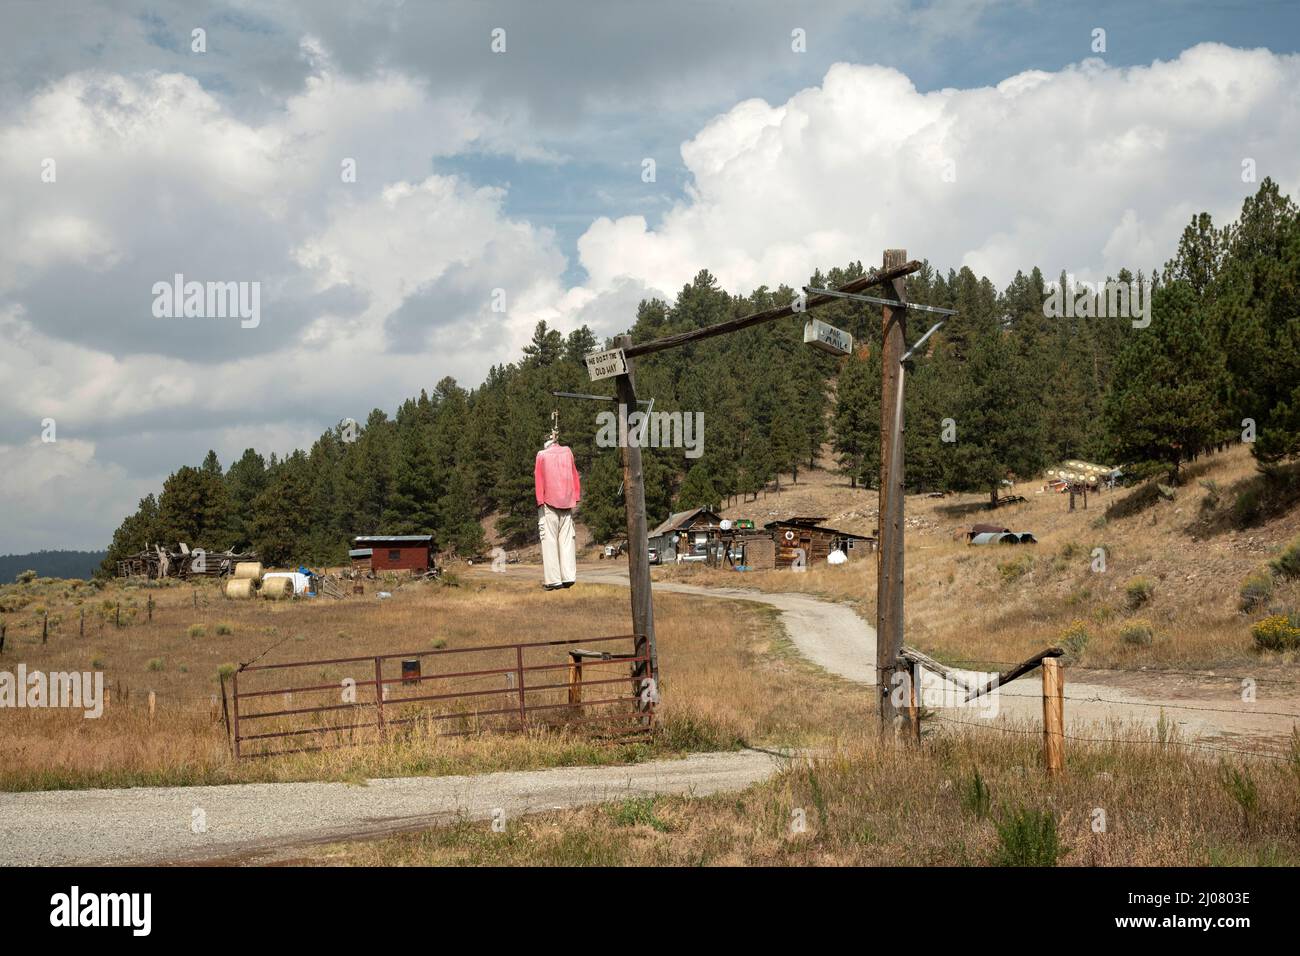 USA, Rocky Mountains, New Mexico, Chama, Redneck ranch Stock Photo